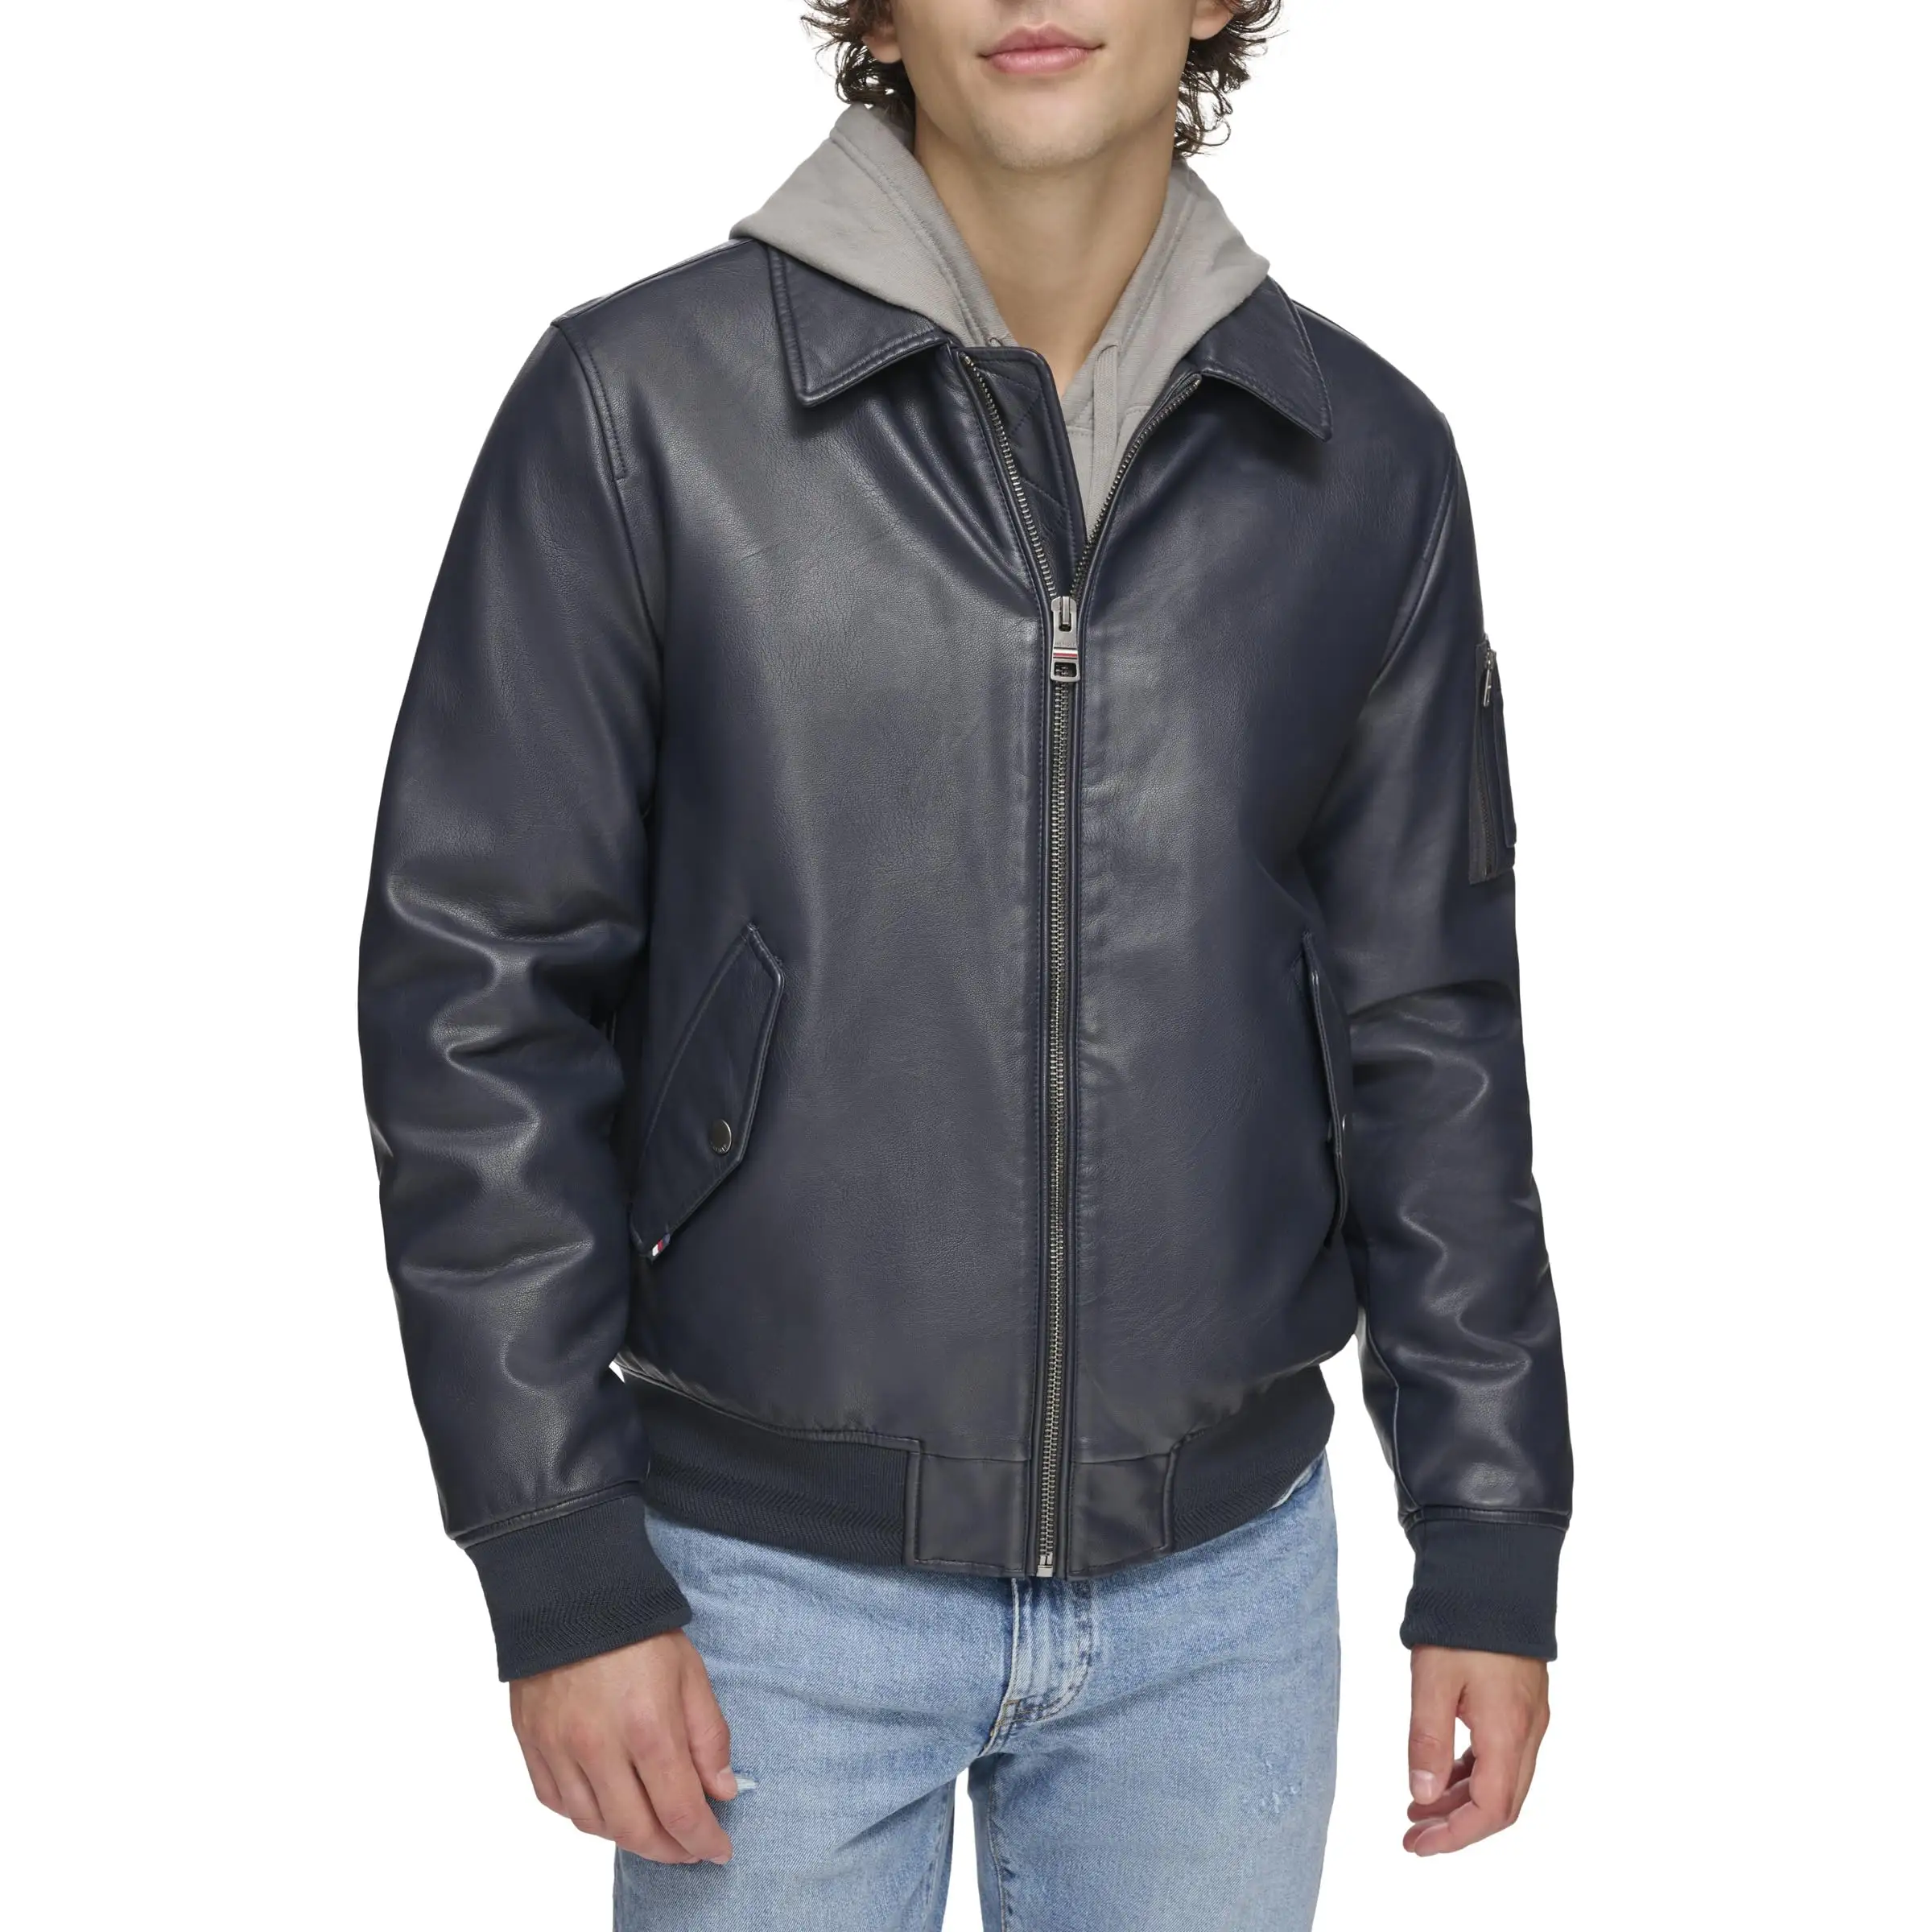 Jaket kulit pria grosir jaket kulit keluaran baru gaya terbaru jaket kulit penjualan terbaik